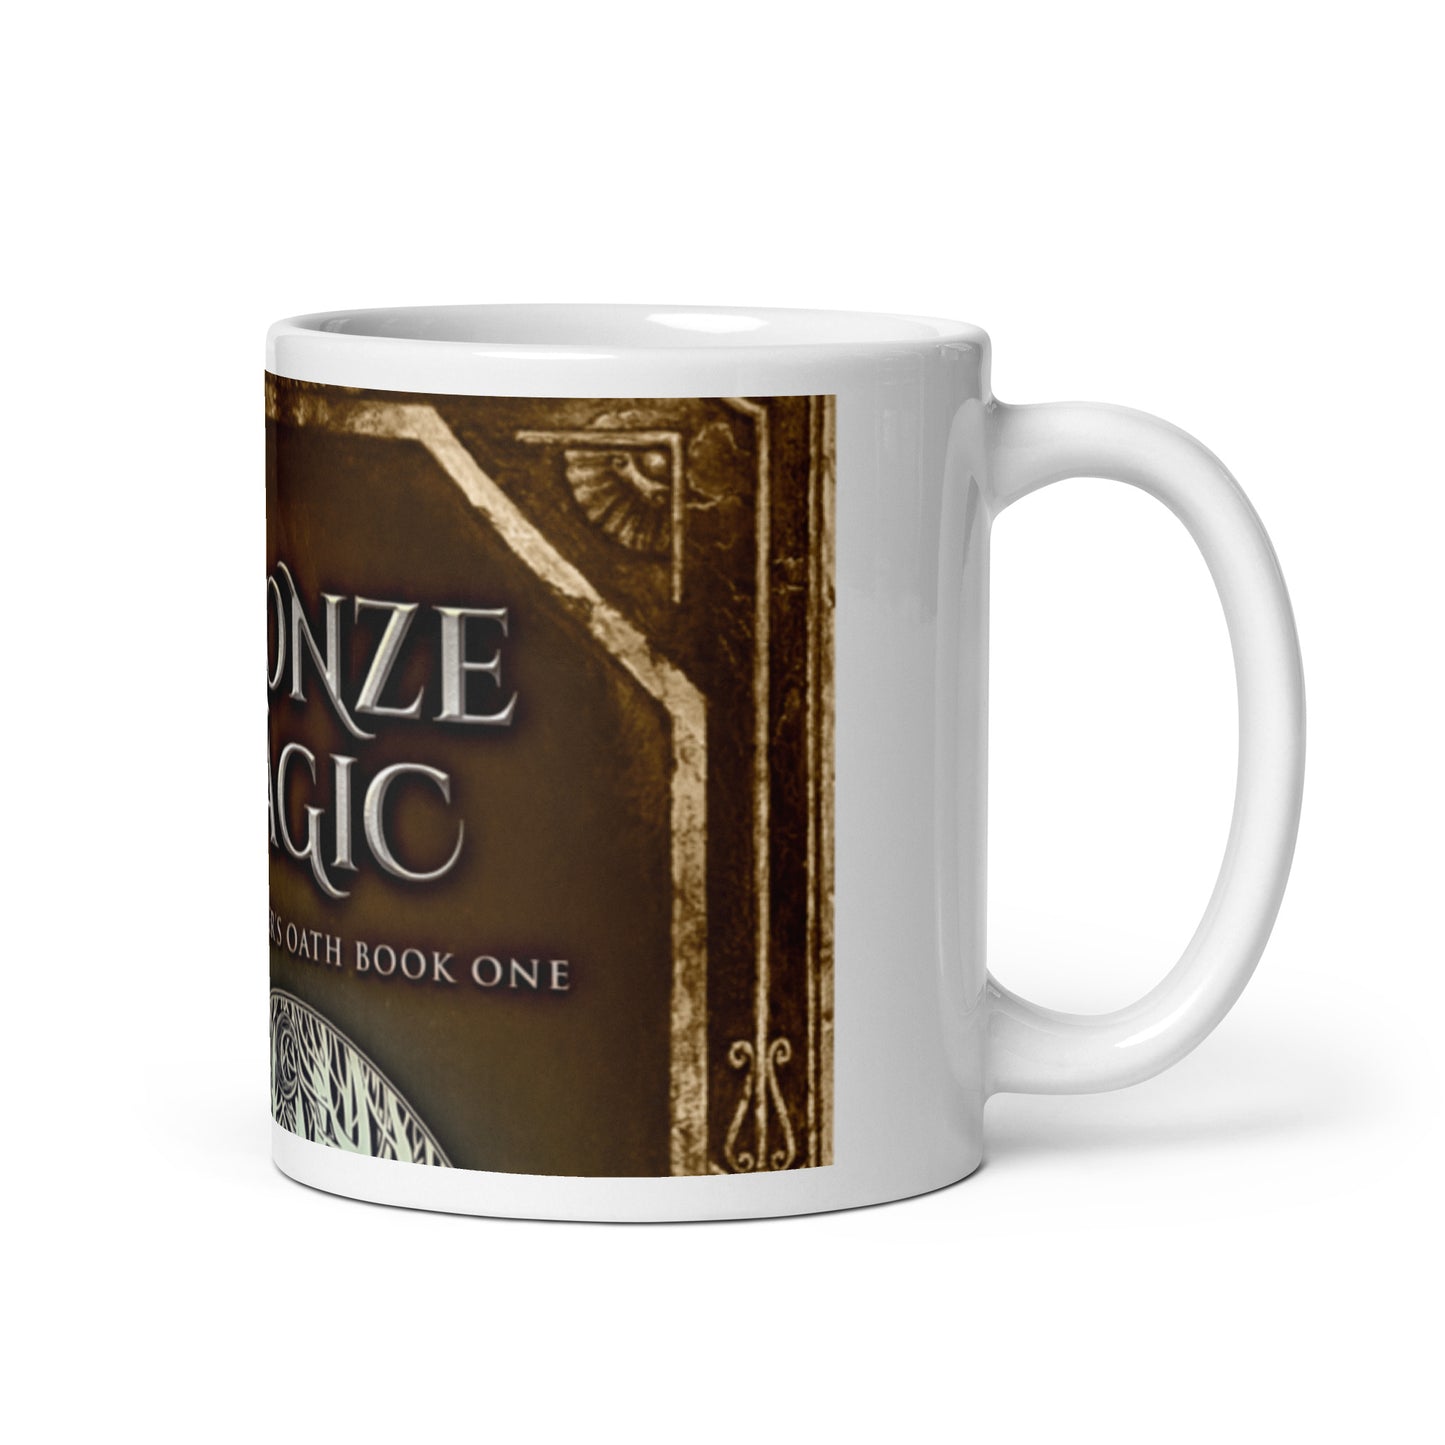 Bronze Magic - White Coffee Mug